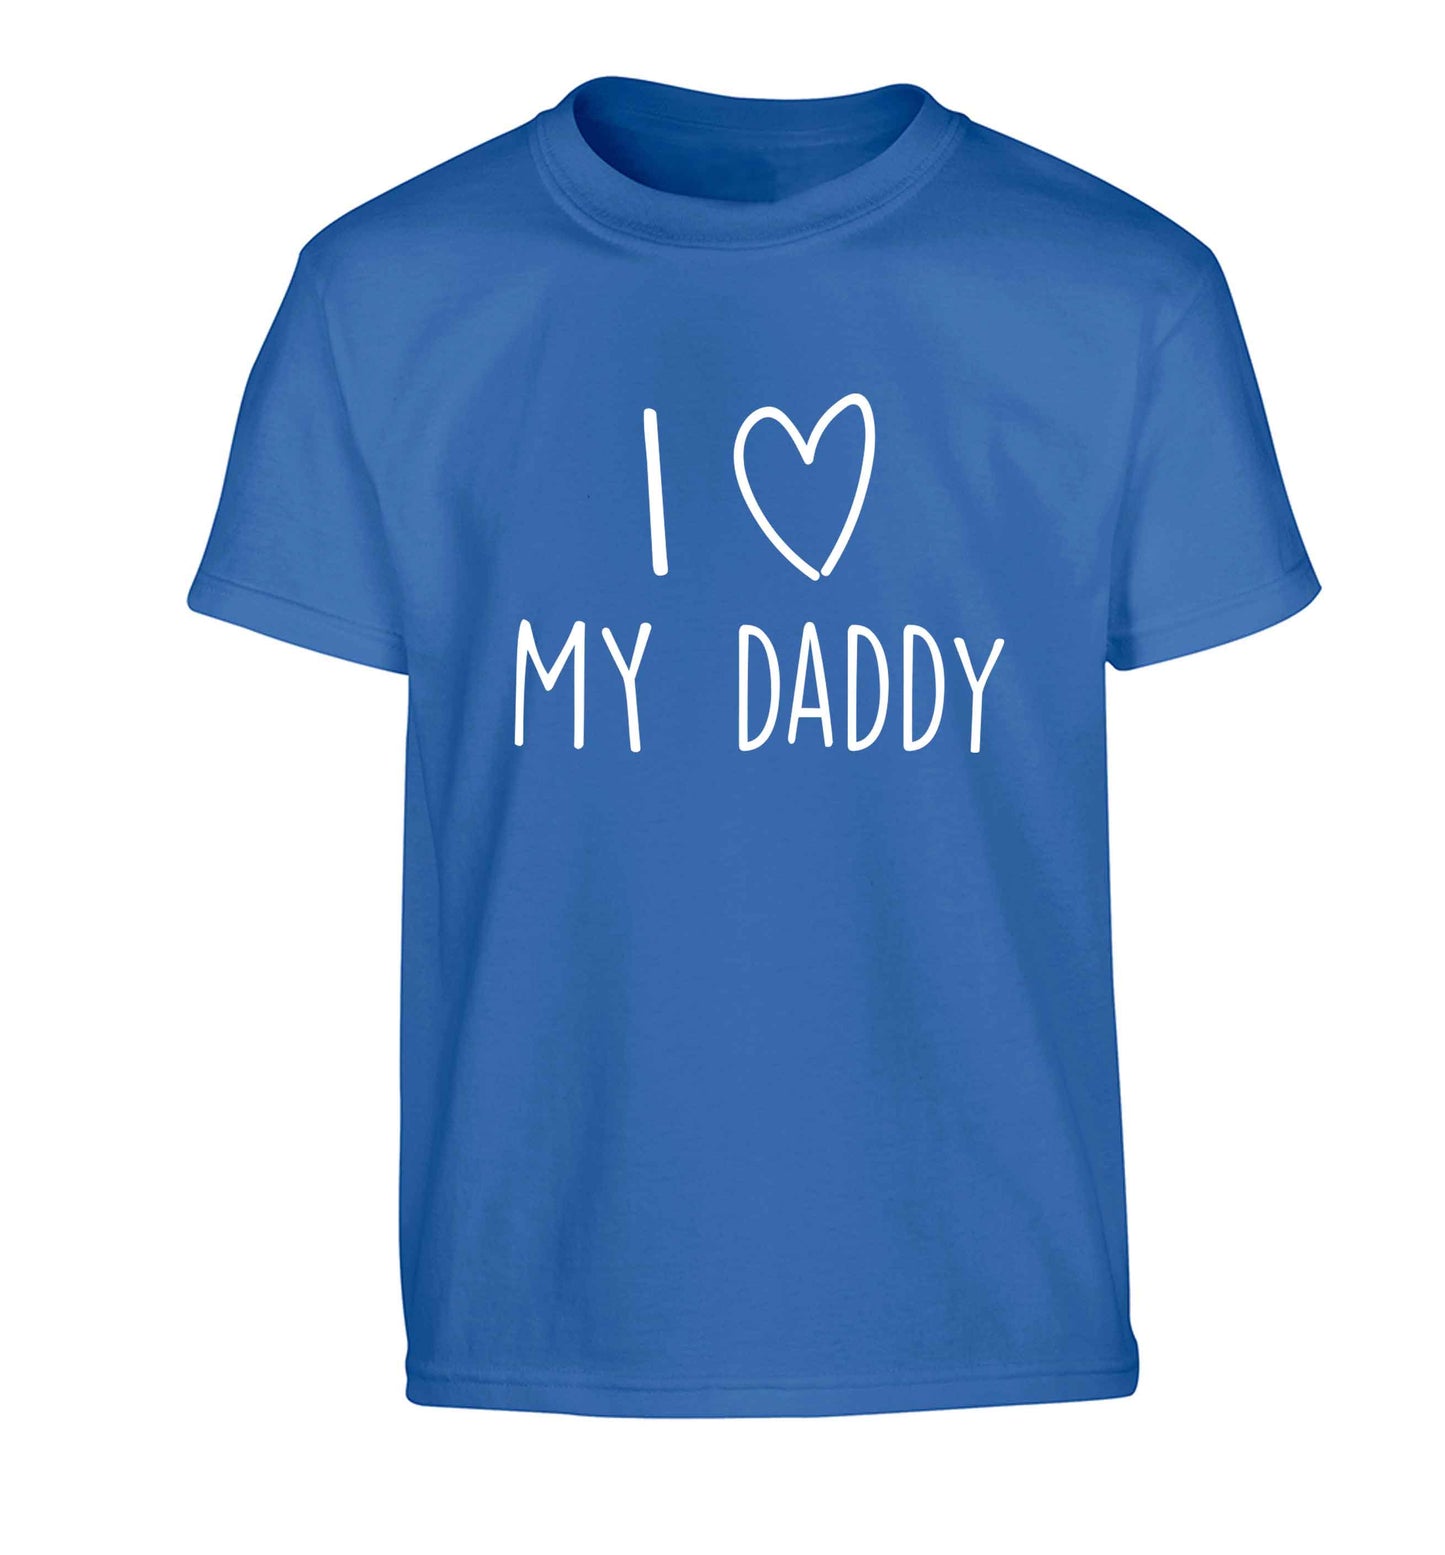 I love my daddy Children's blue Tshirt 12-13 Years